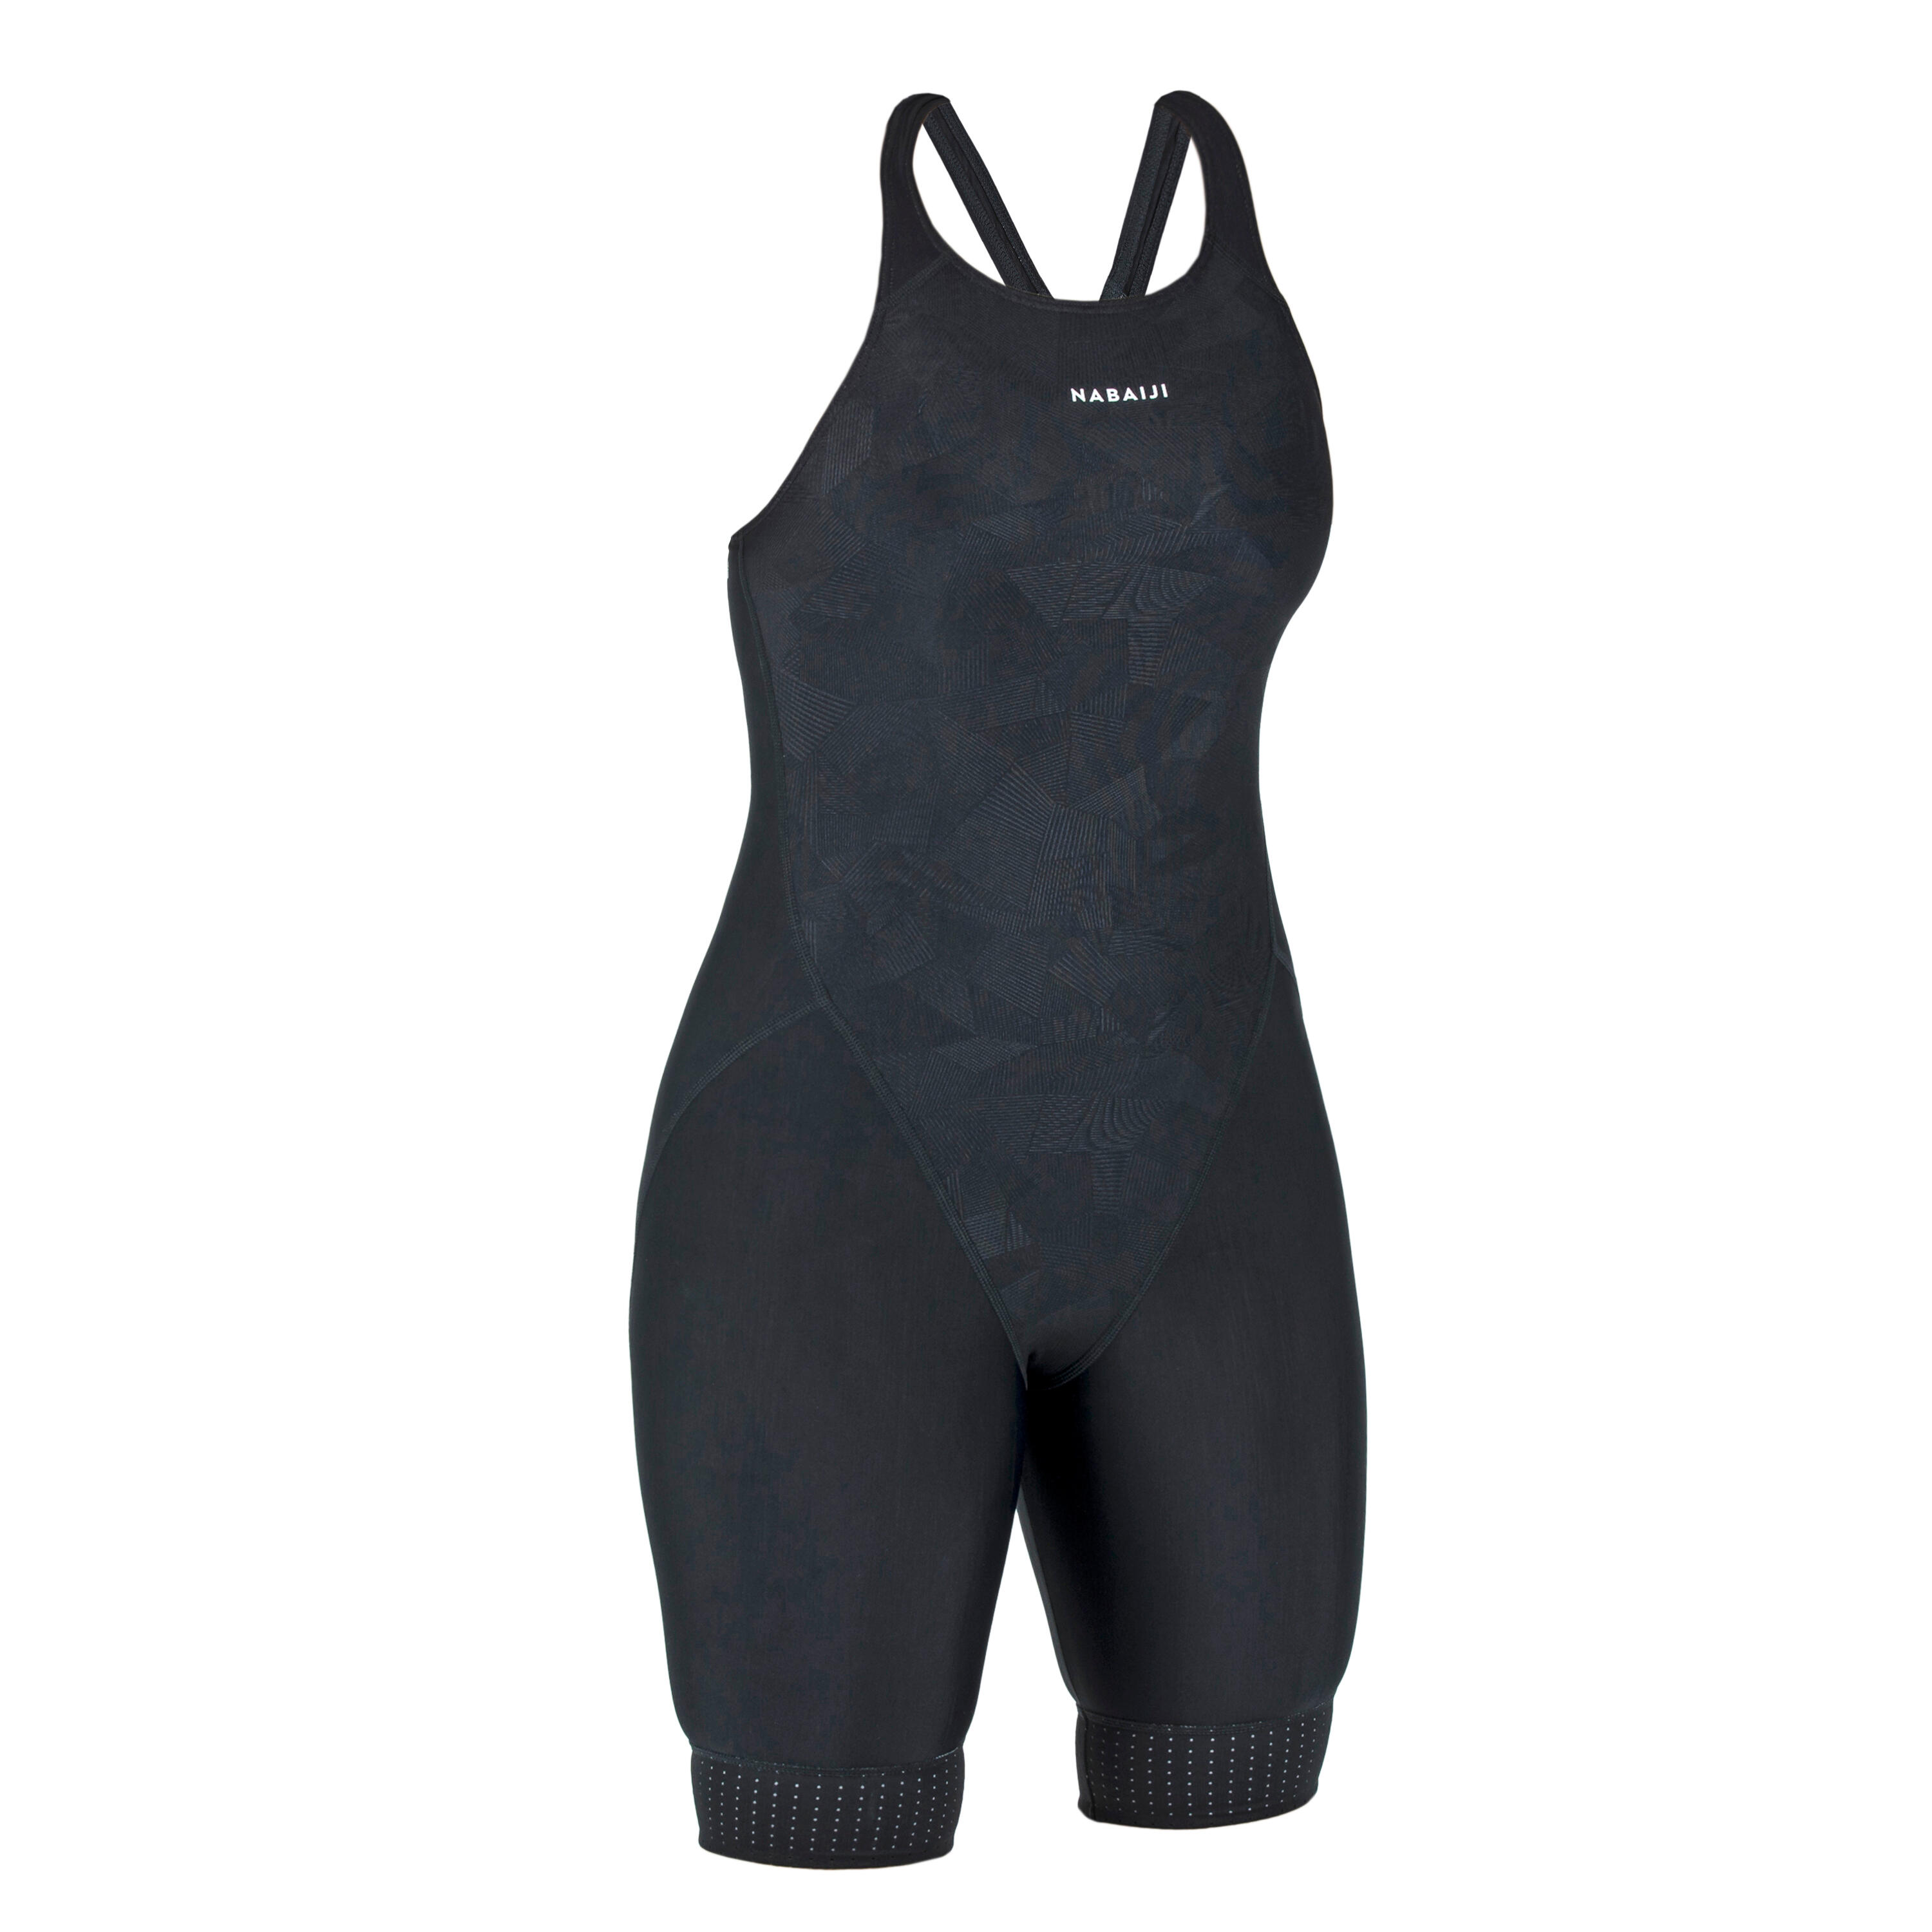 Women's shorty swimsuit Kamyleon Geol black 3/4